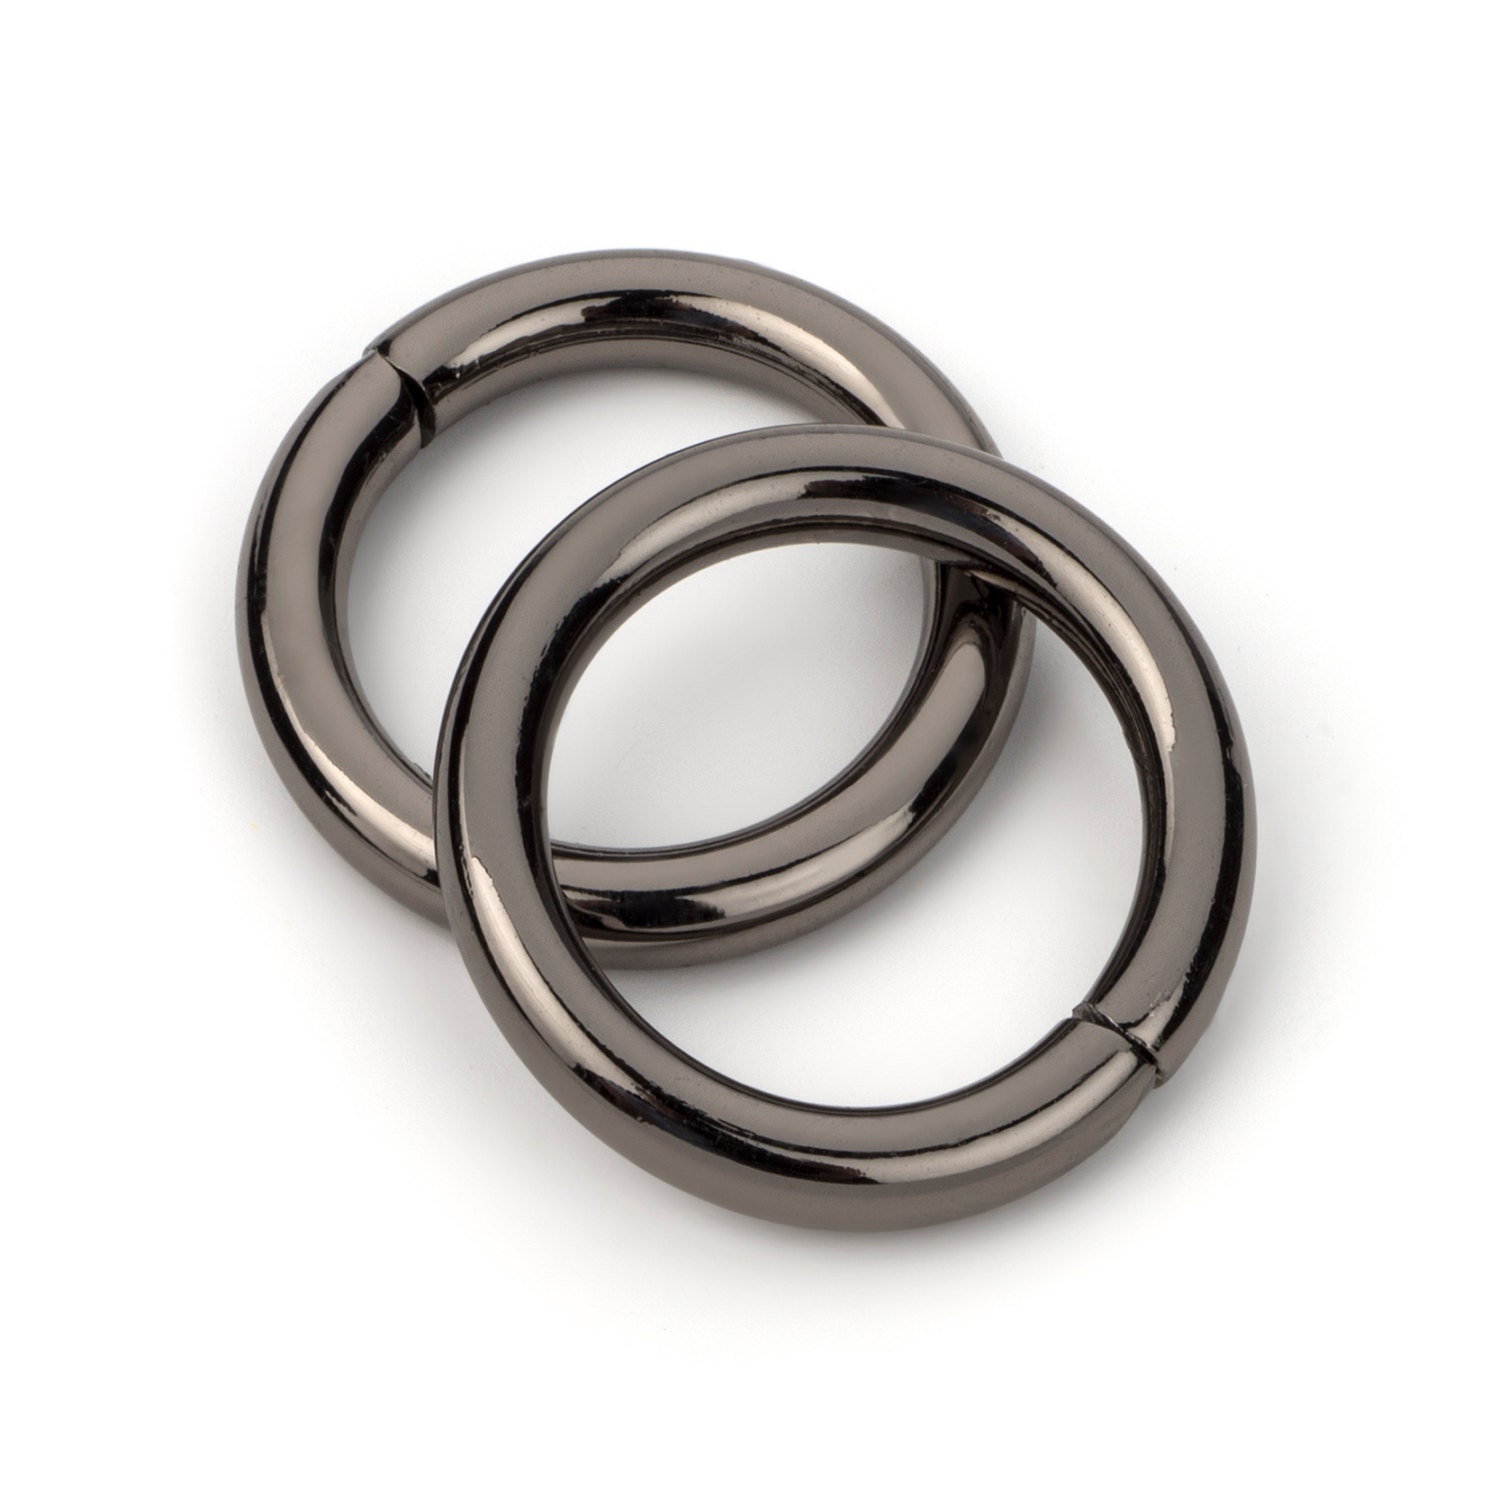 5/8 Metal O Rings Non Welded - Black Nickel - (O-RING ORG-156)